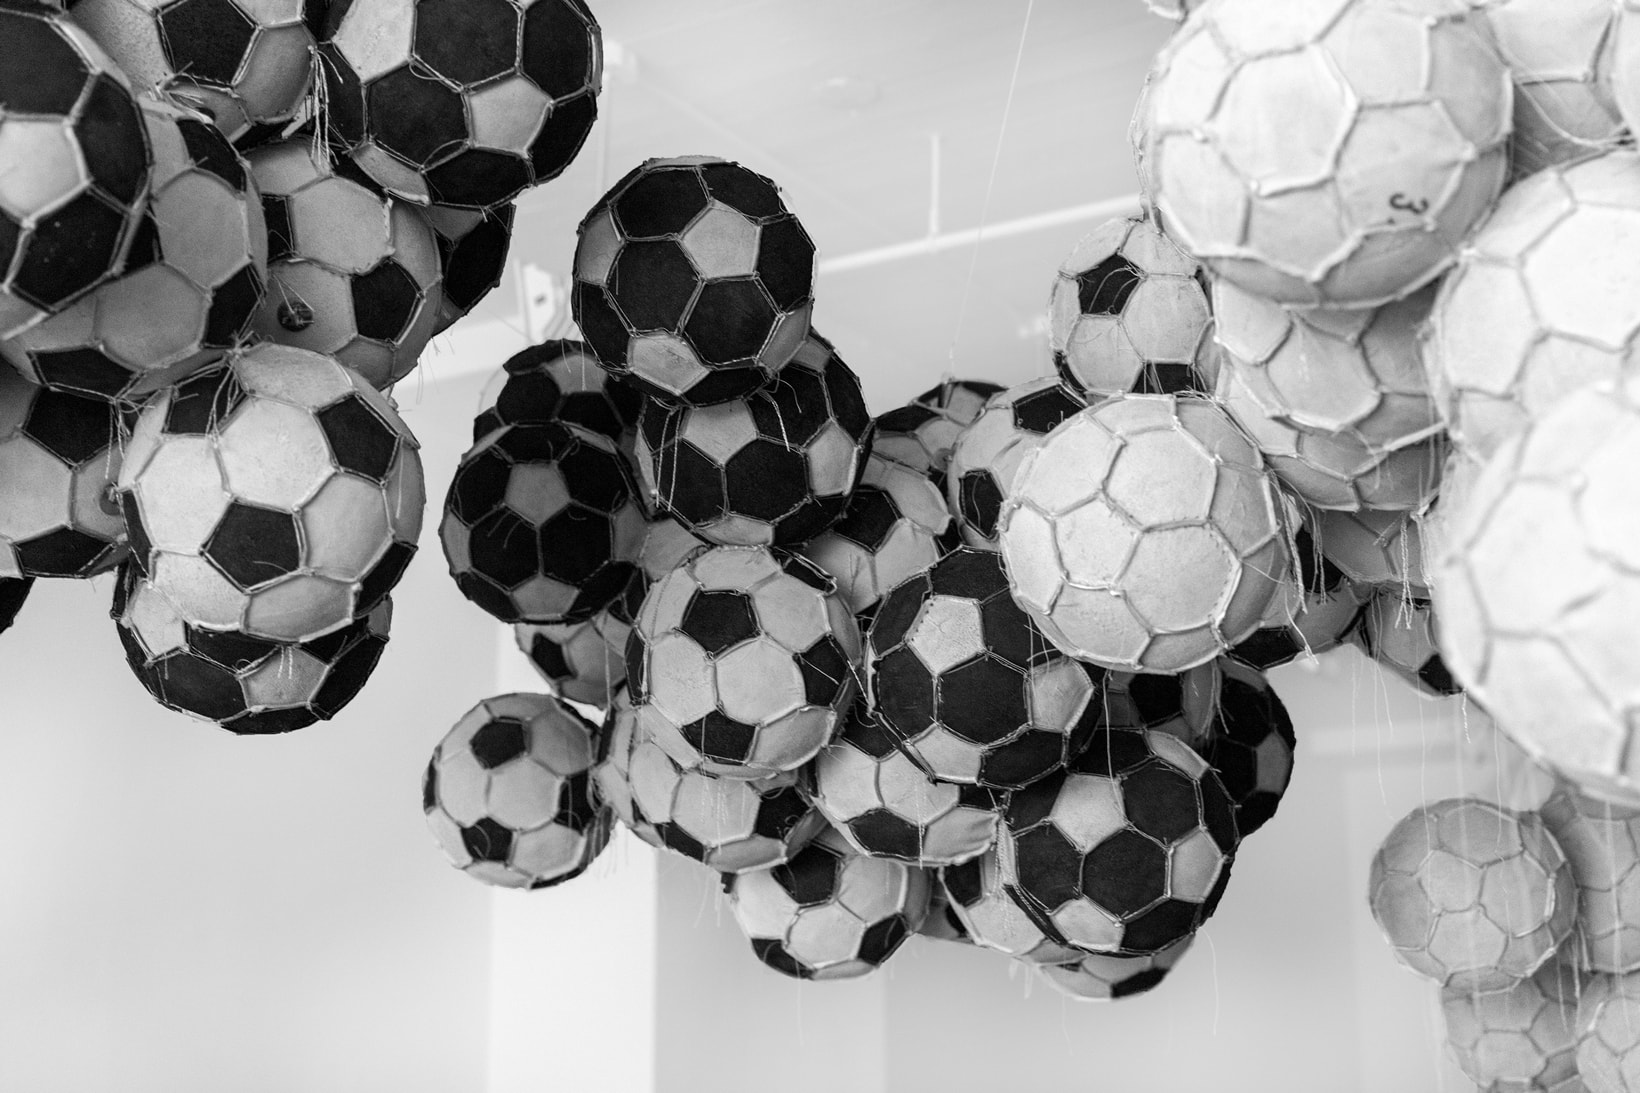 dario escobar reigning champ obverse and reverse xli installation artworks sculptures soccer football futbol